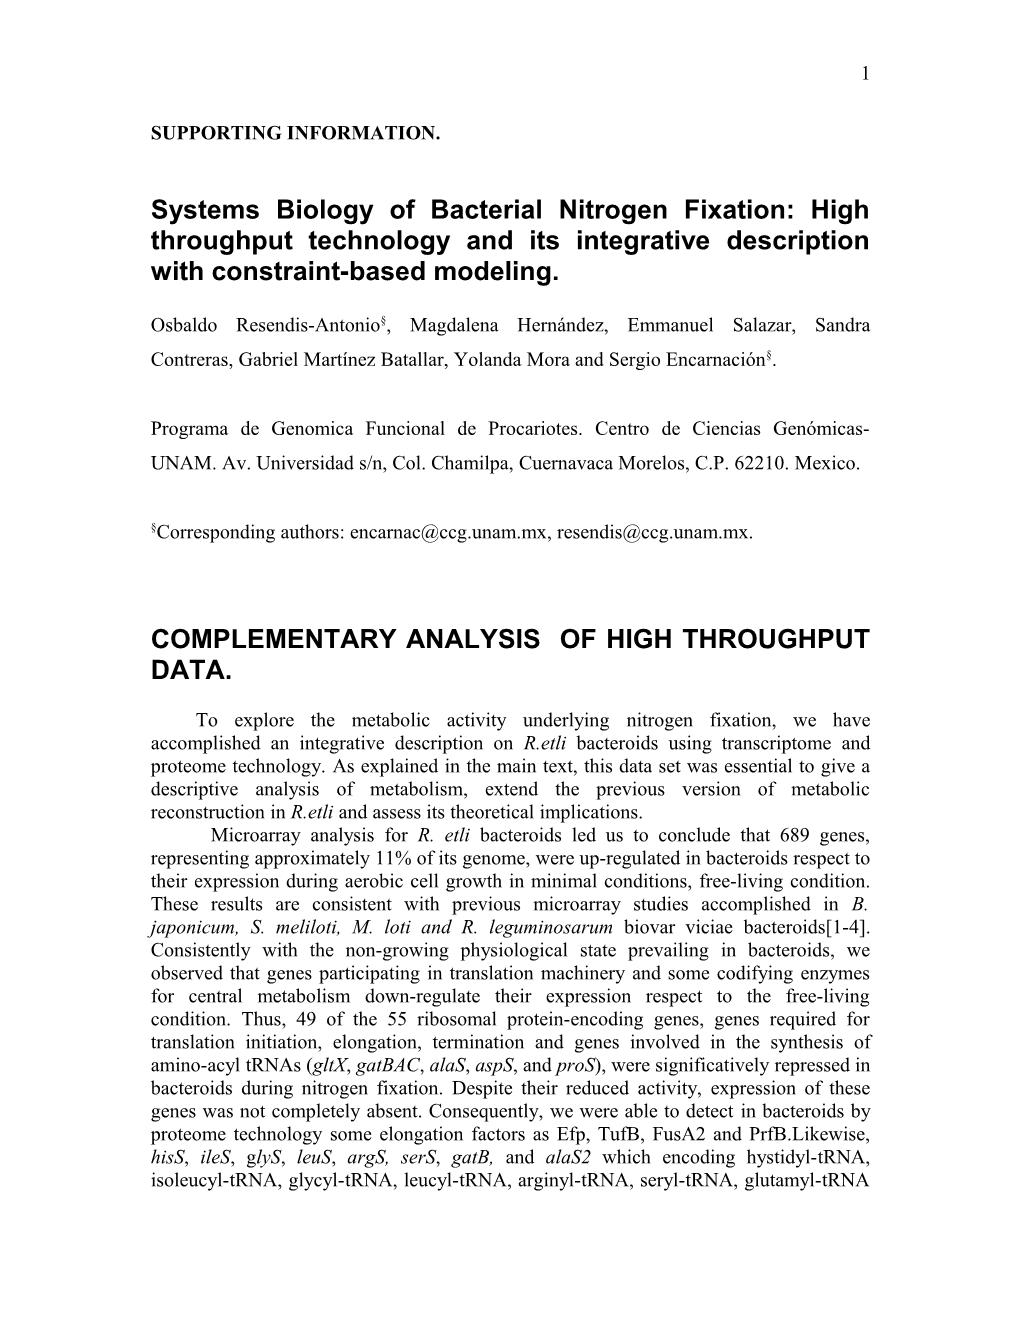 Systems Biology of Biological Nitrogen Fixation: High Throughput Technology As a Guide